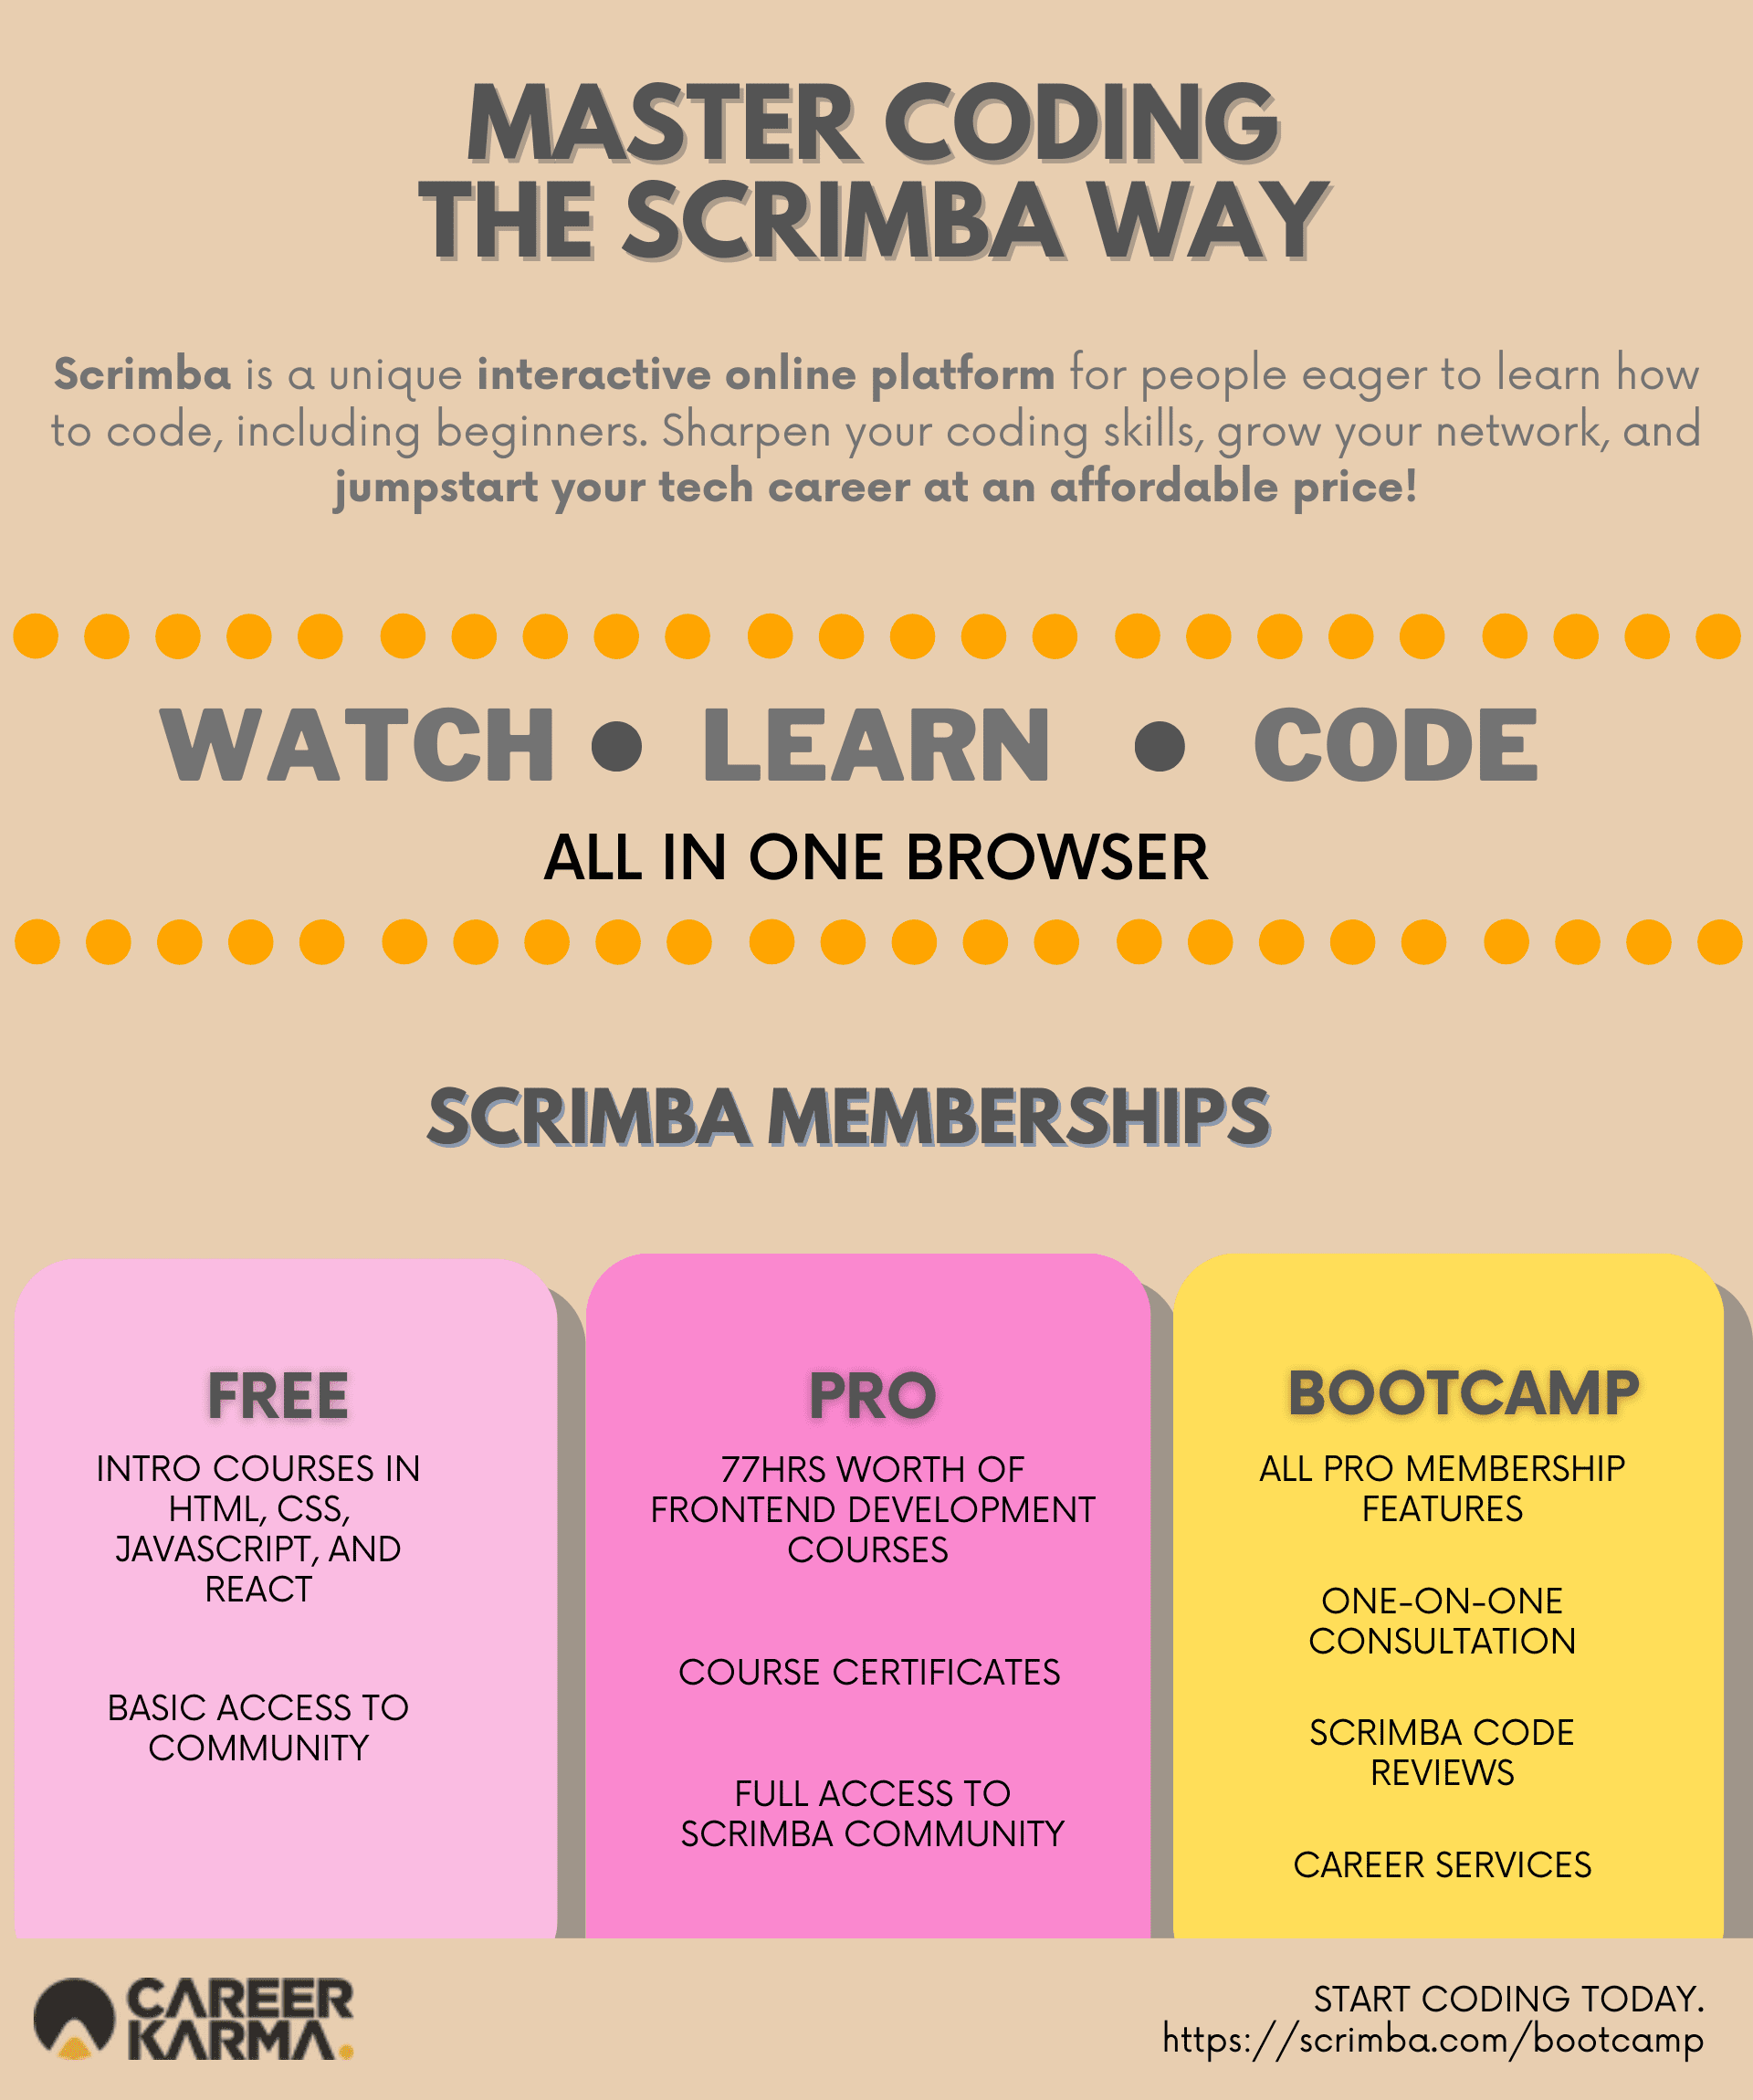 An infographic on Scrimba’s coding program plans